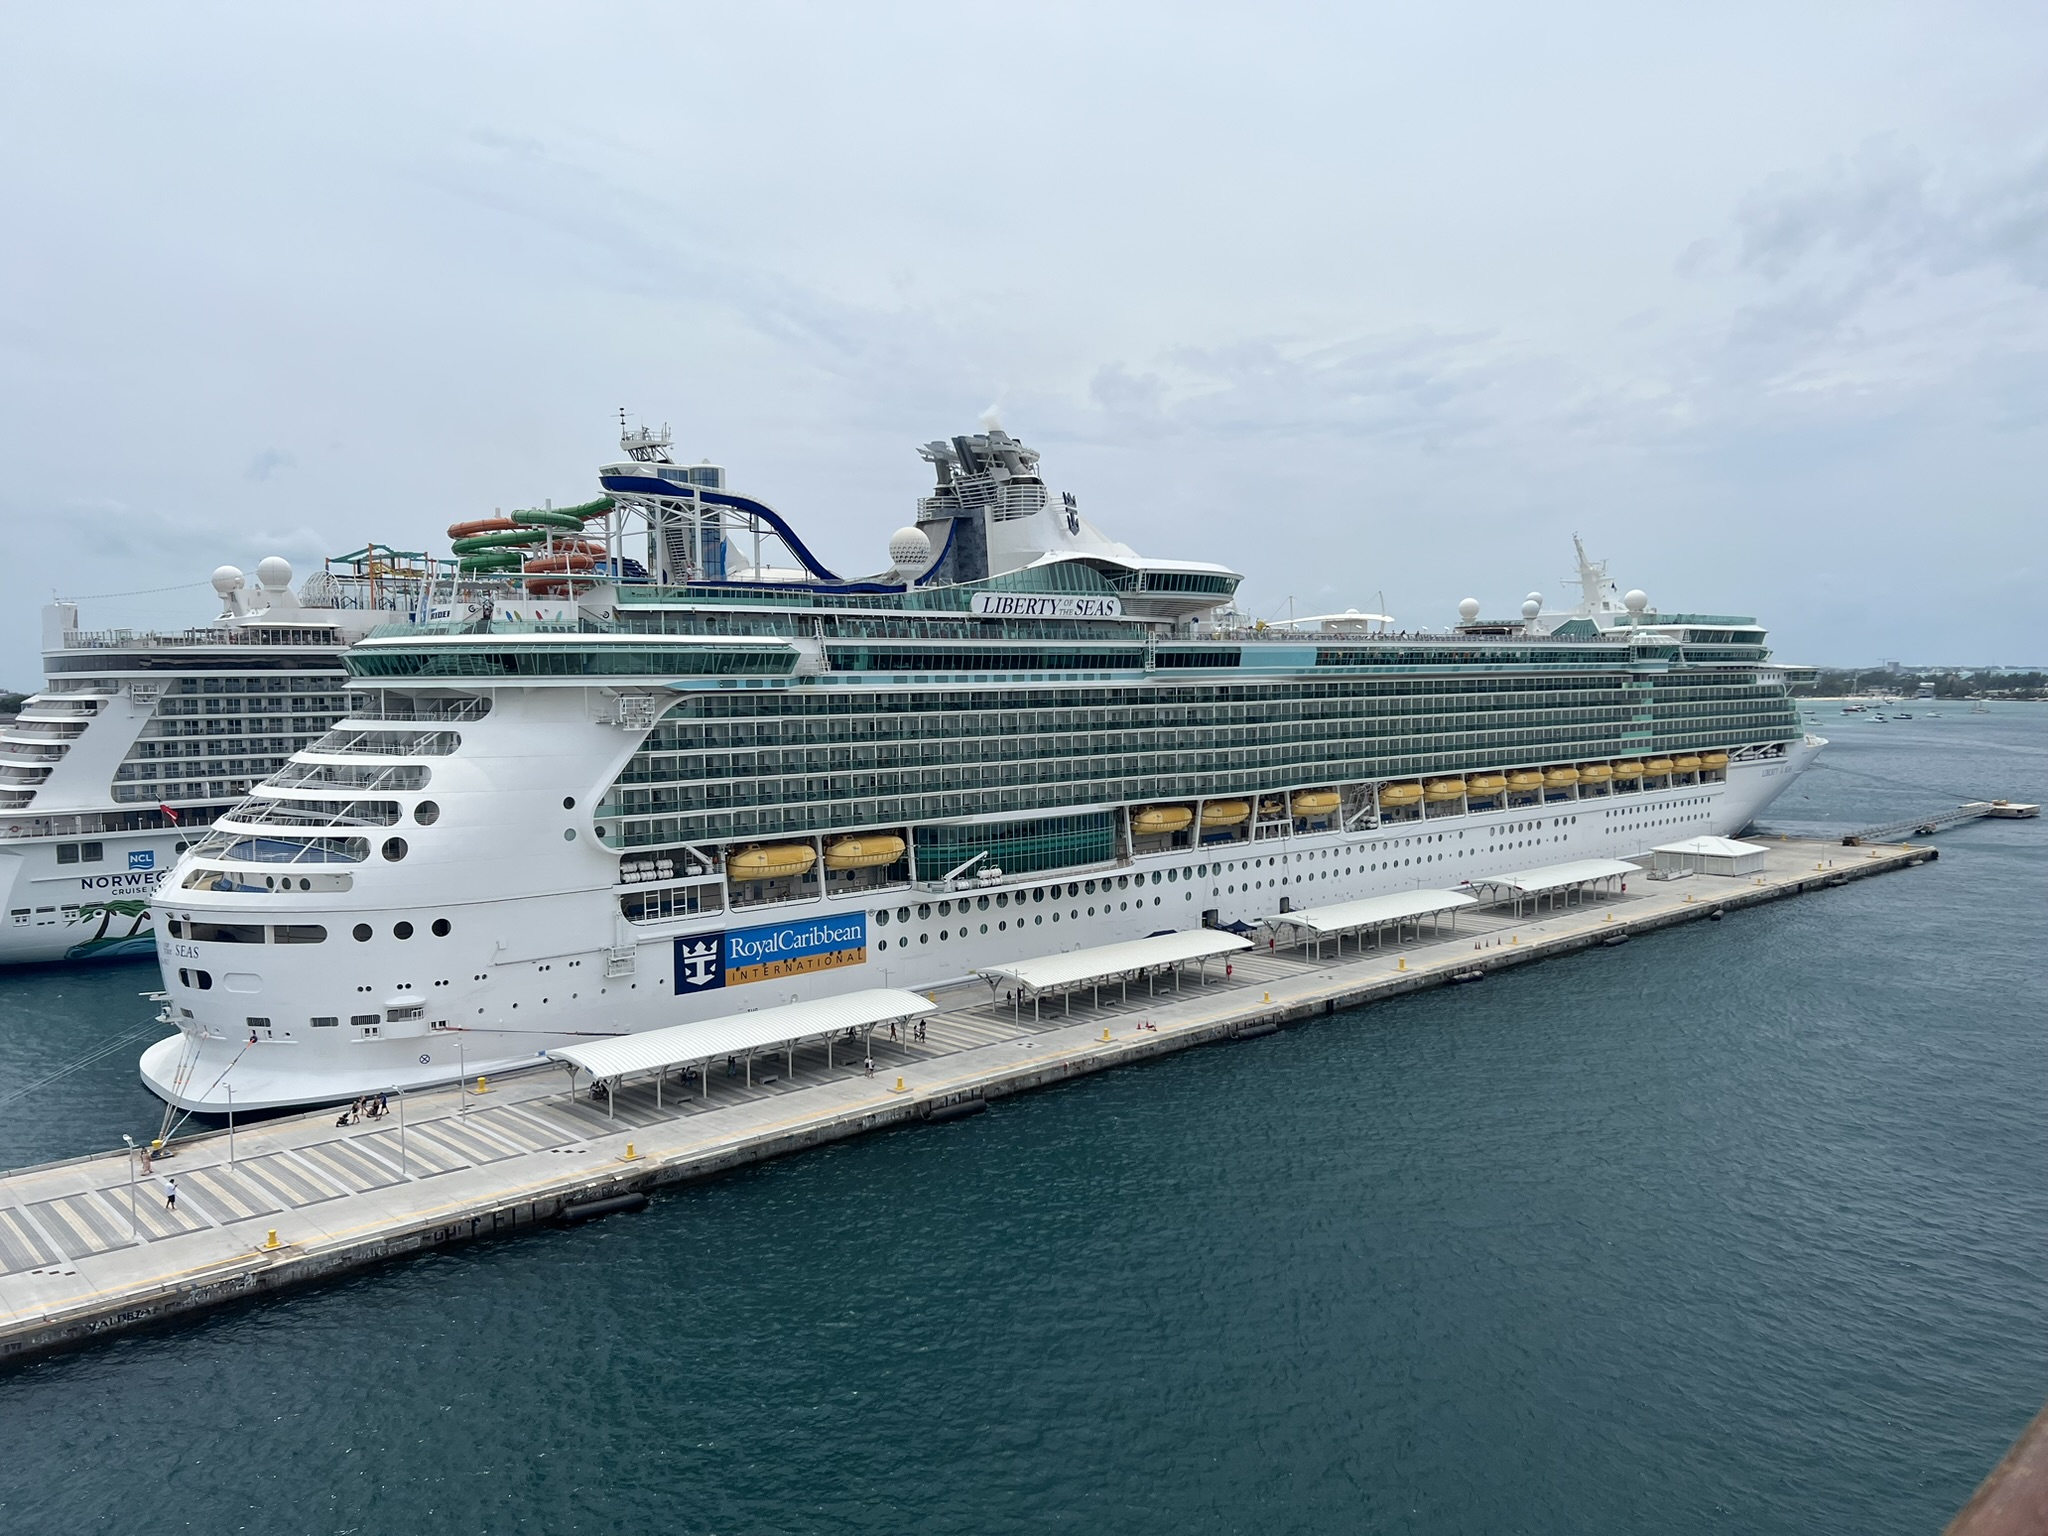 Cruise Ships – Royal Caribbean’s Cruise Ship Liberty of the Seas Leaves the Port of Nassau Bahamas